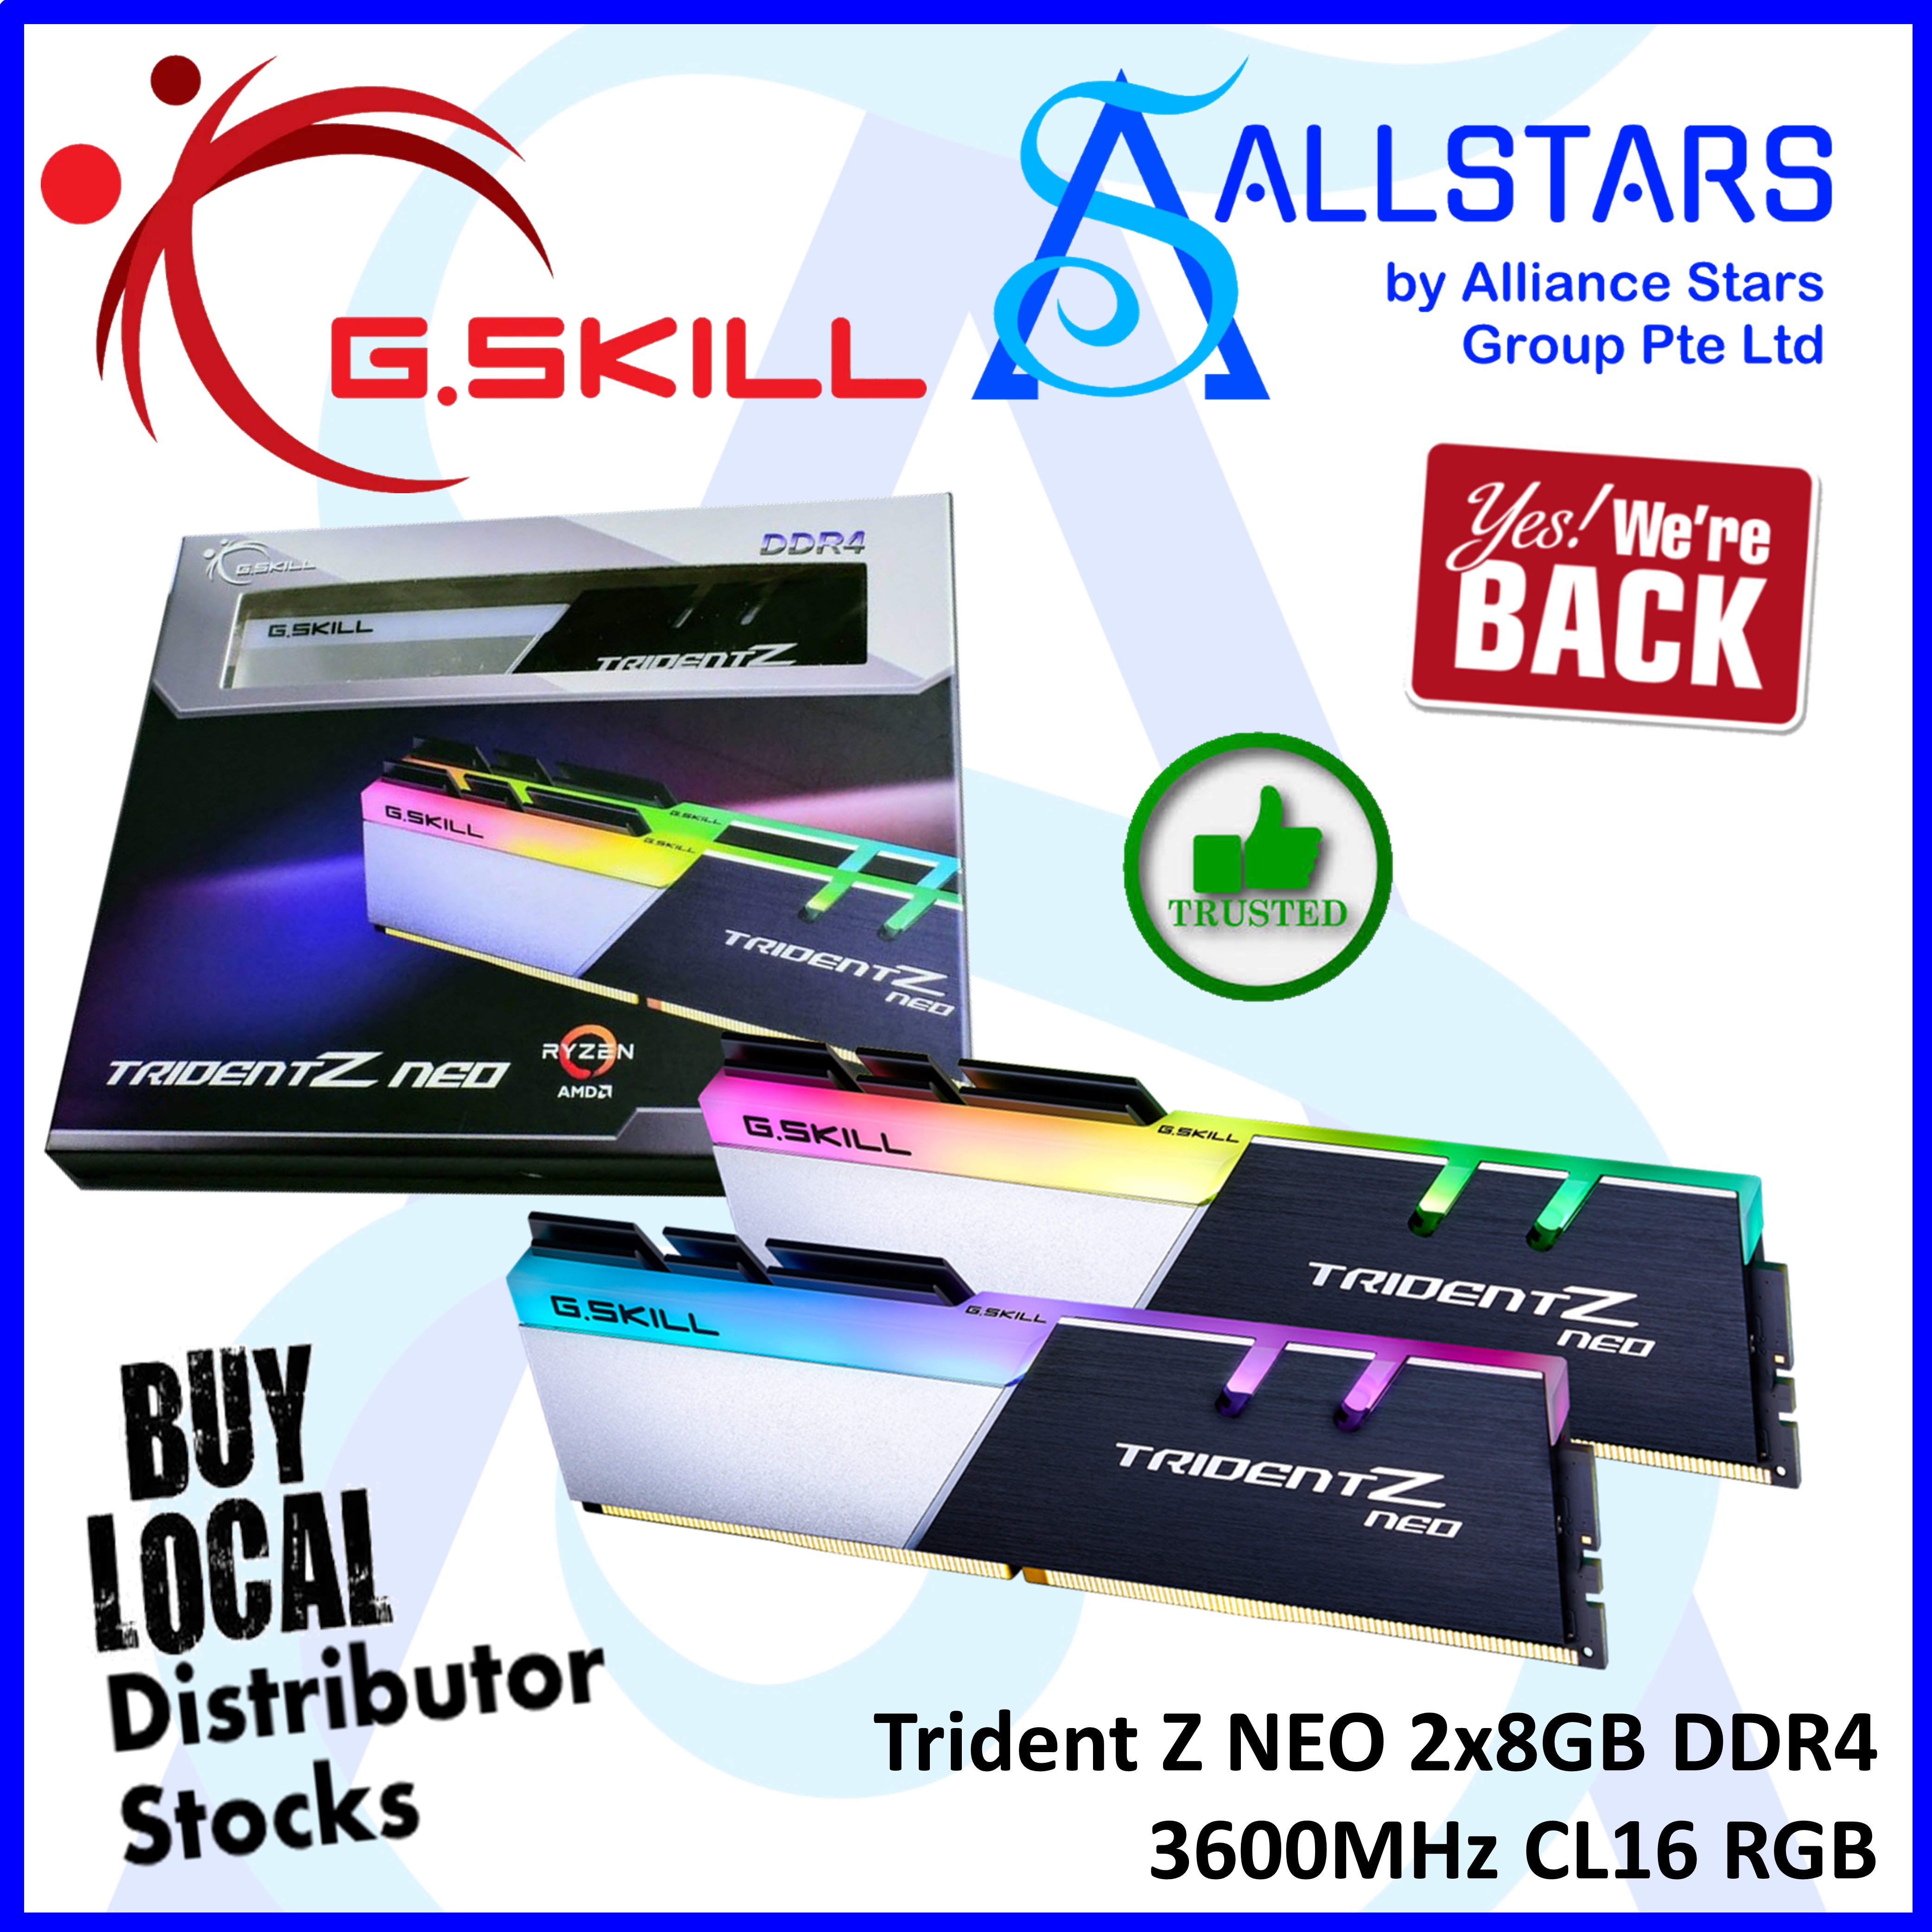 ALLSTARS : We are Back / Promo) G.Skill Trident Z NEO 2x8GB DDR4